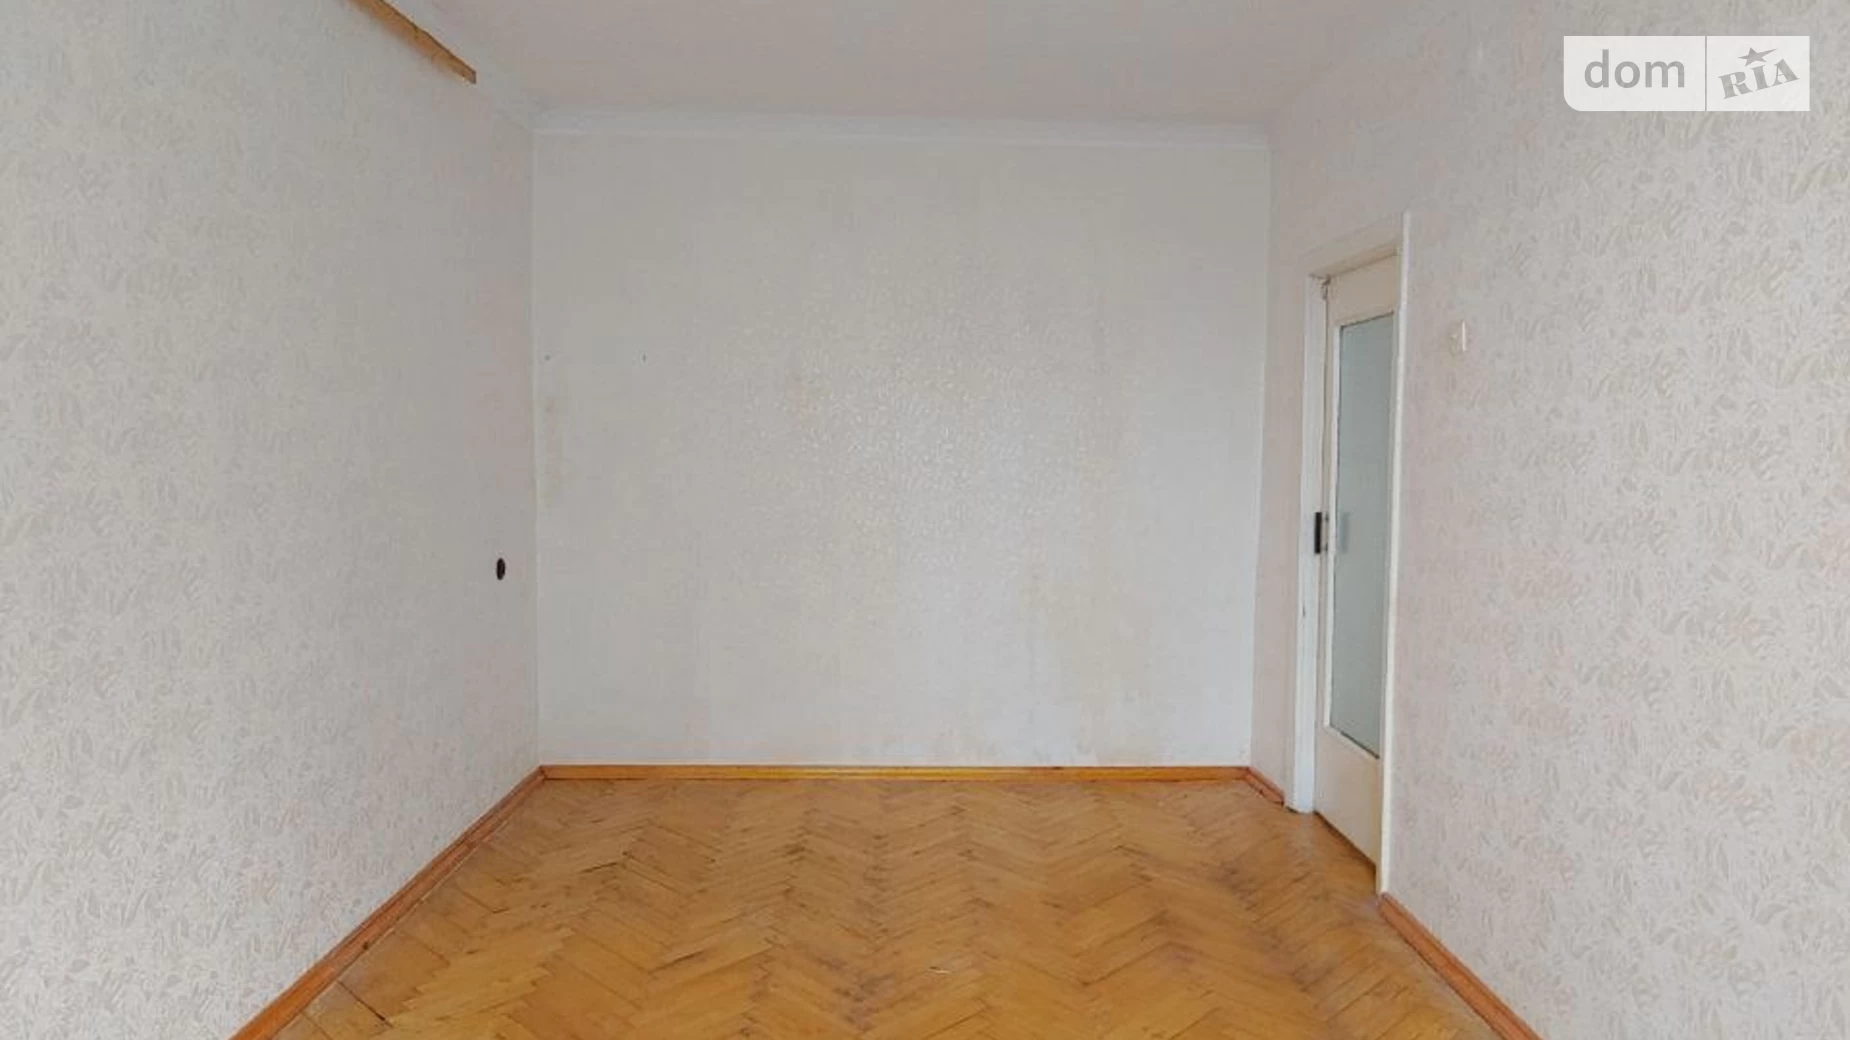 Продается 4-комнатная квартира 89.8 кв. м в Белой Церкви, бул. Александрийский, 79 - фото 2